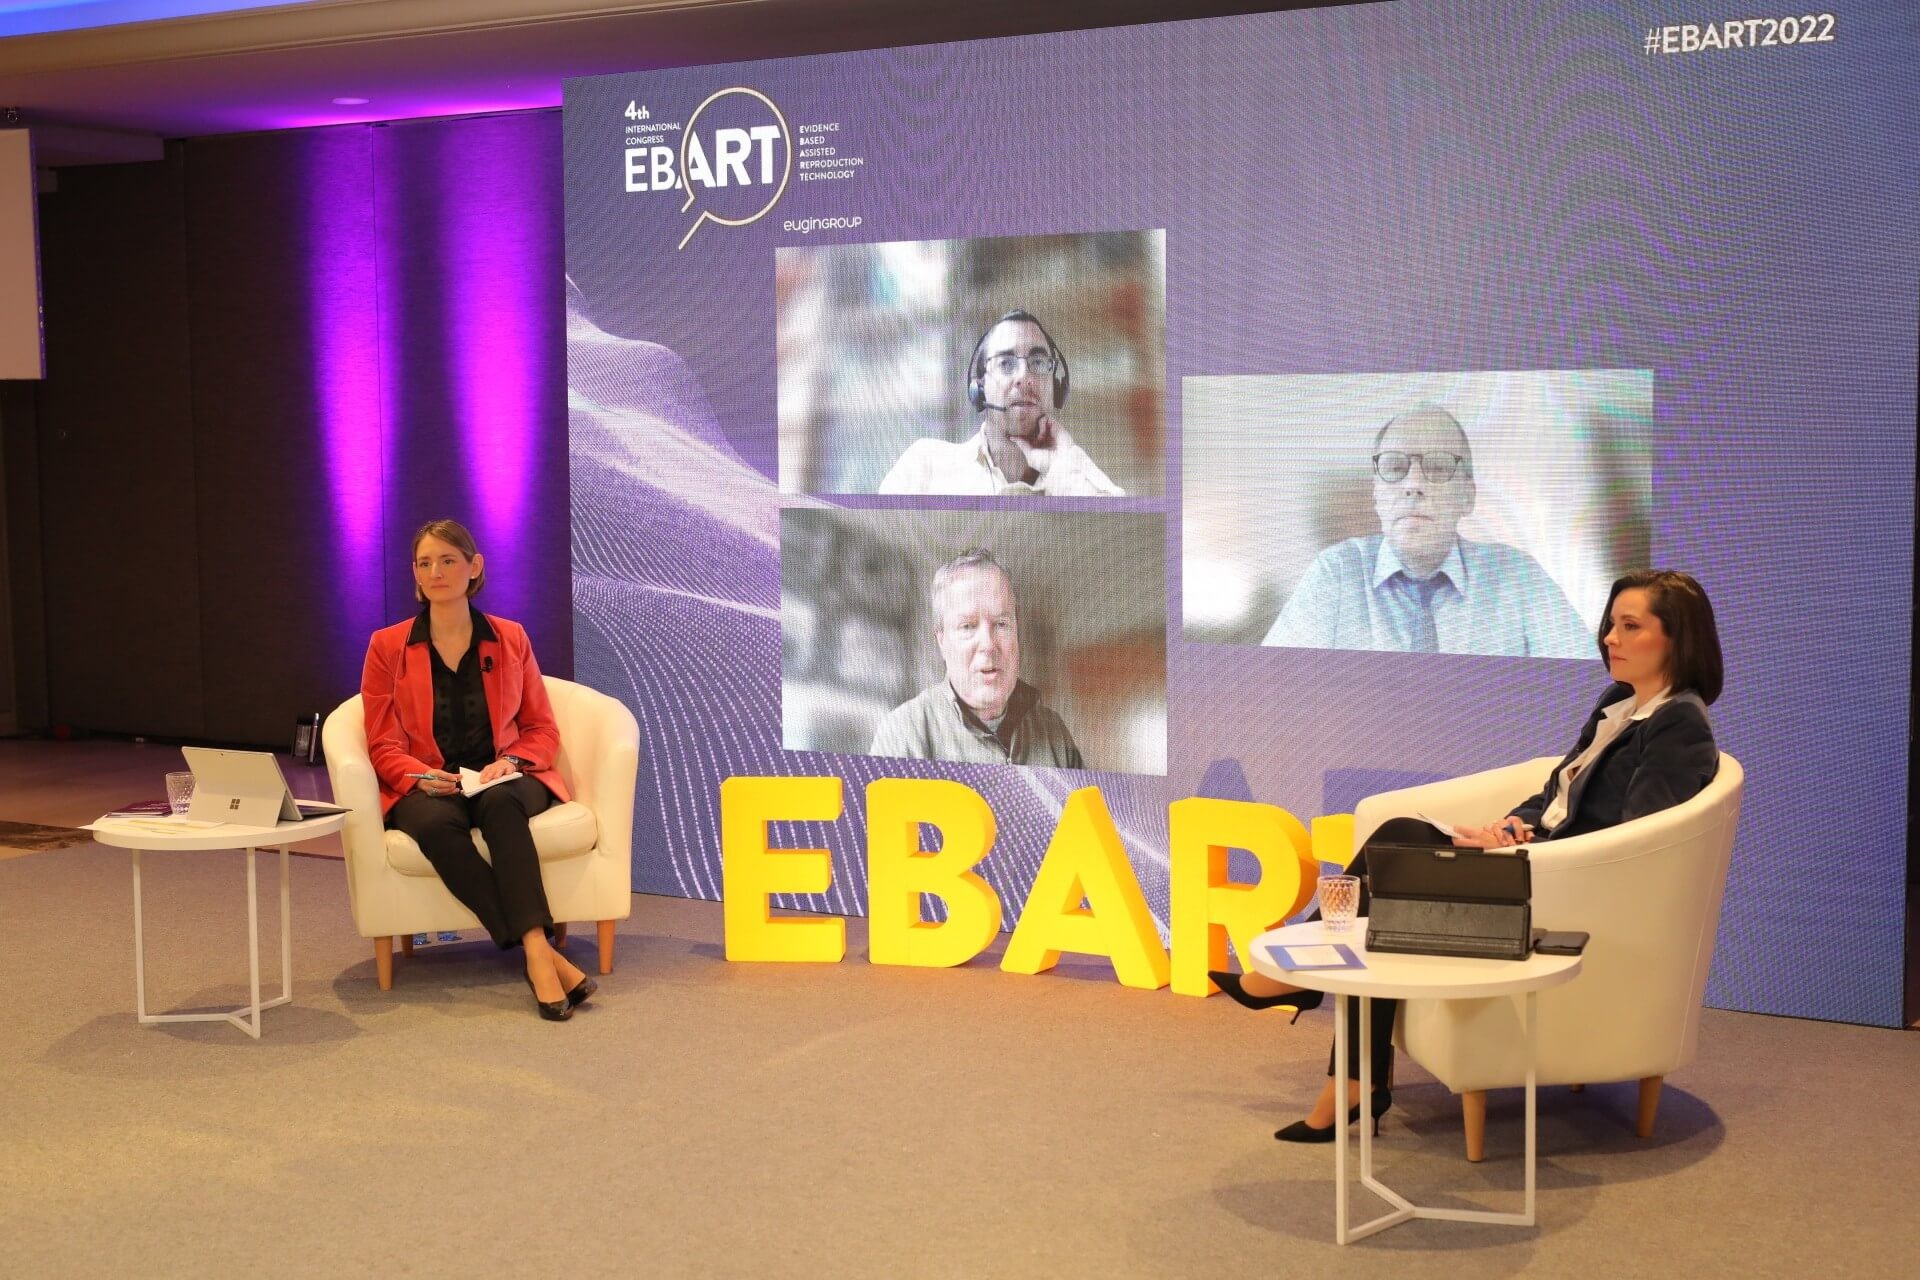 Eugin Group's EBART 2022 scientific congress